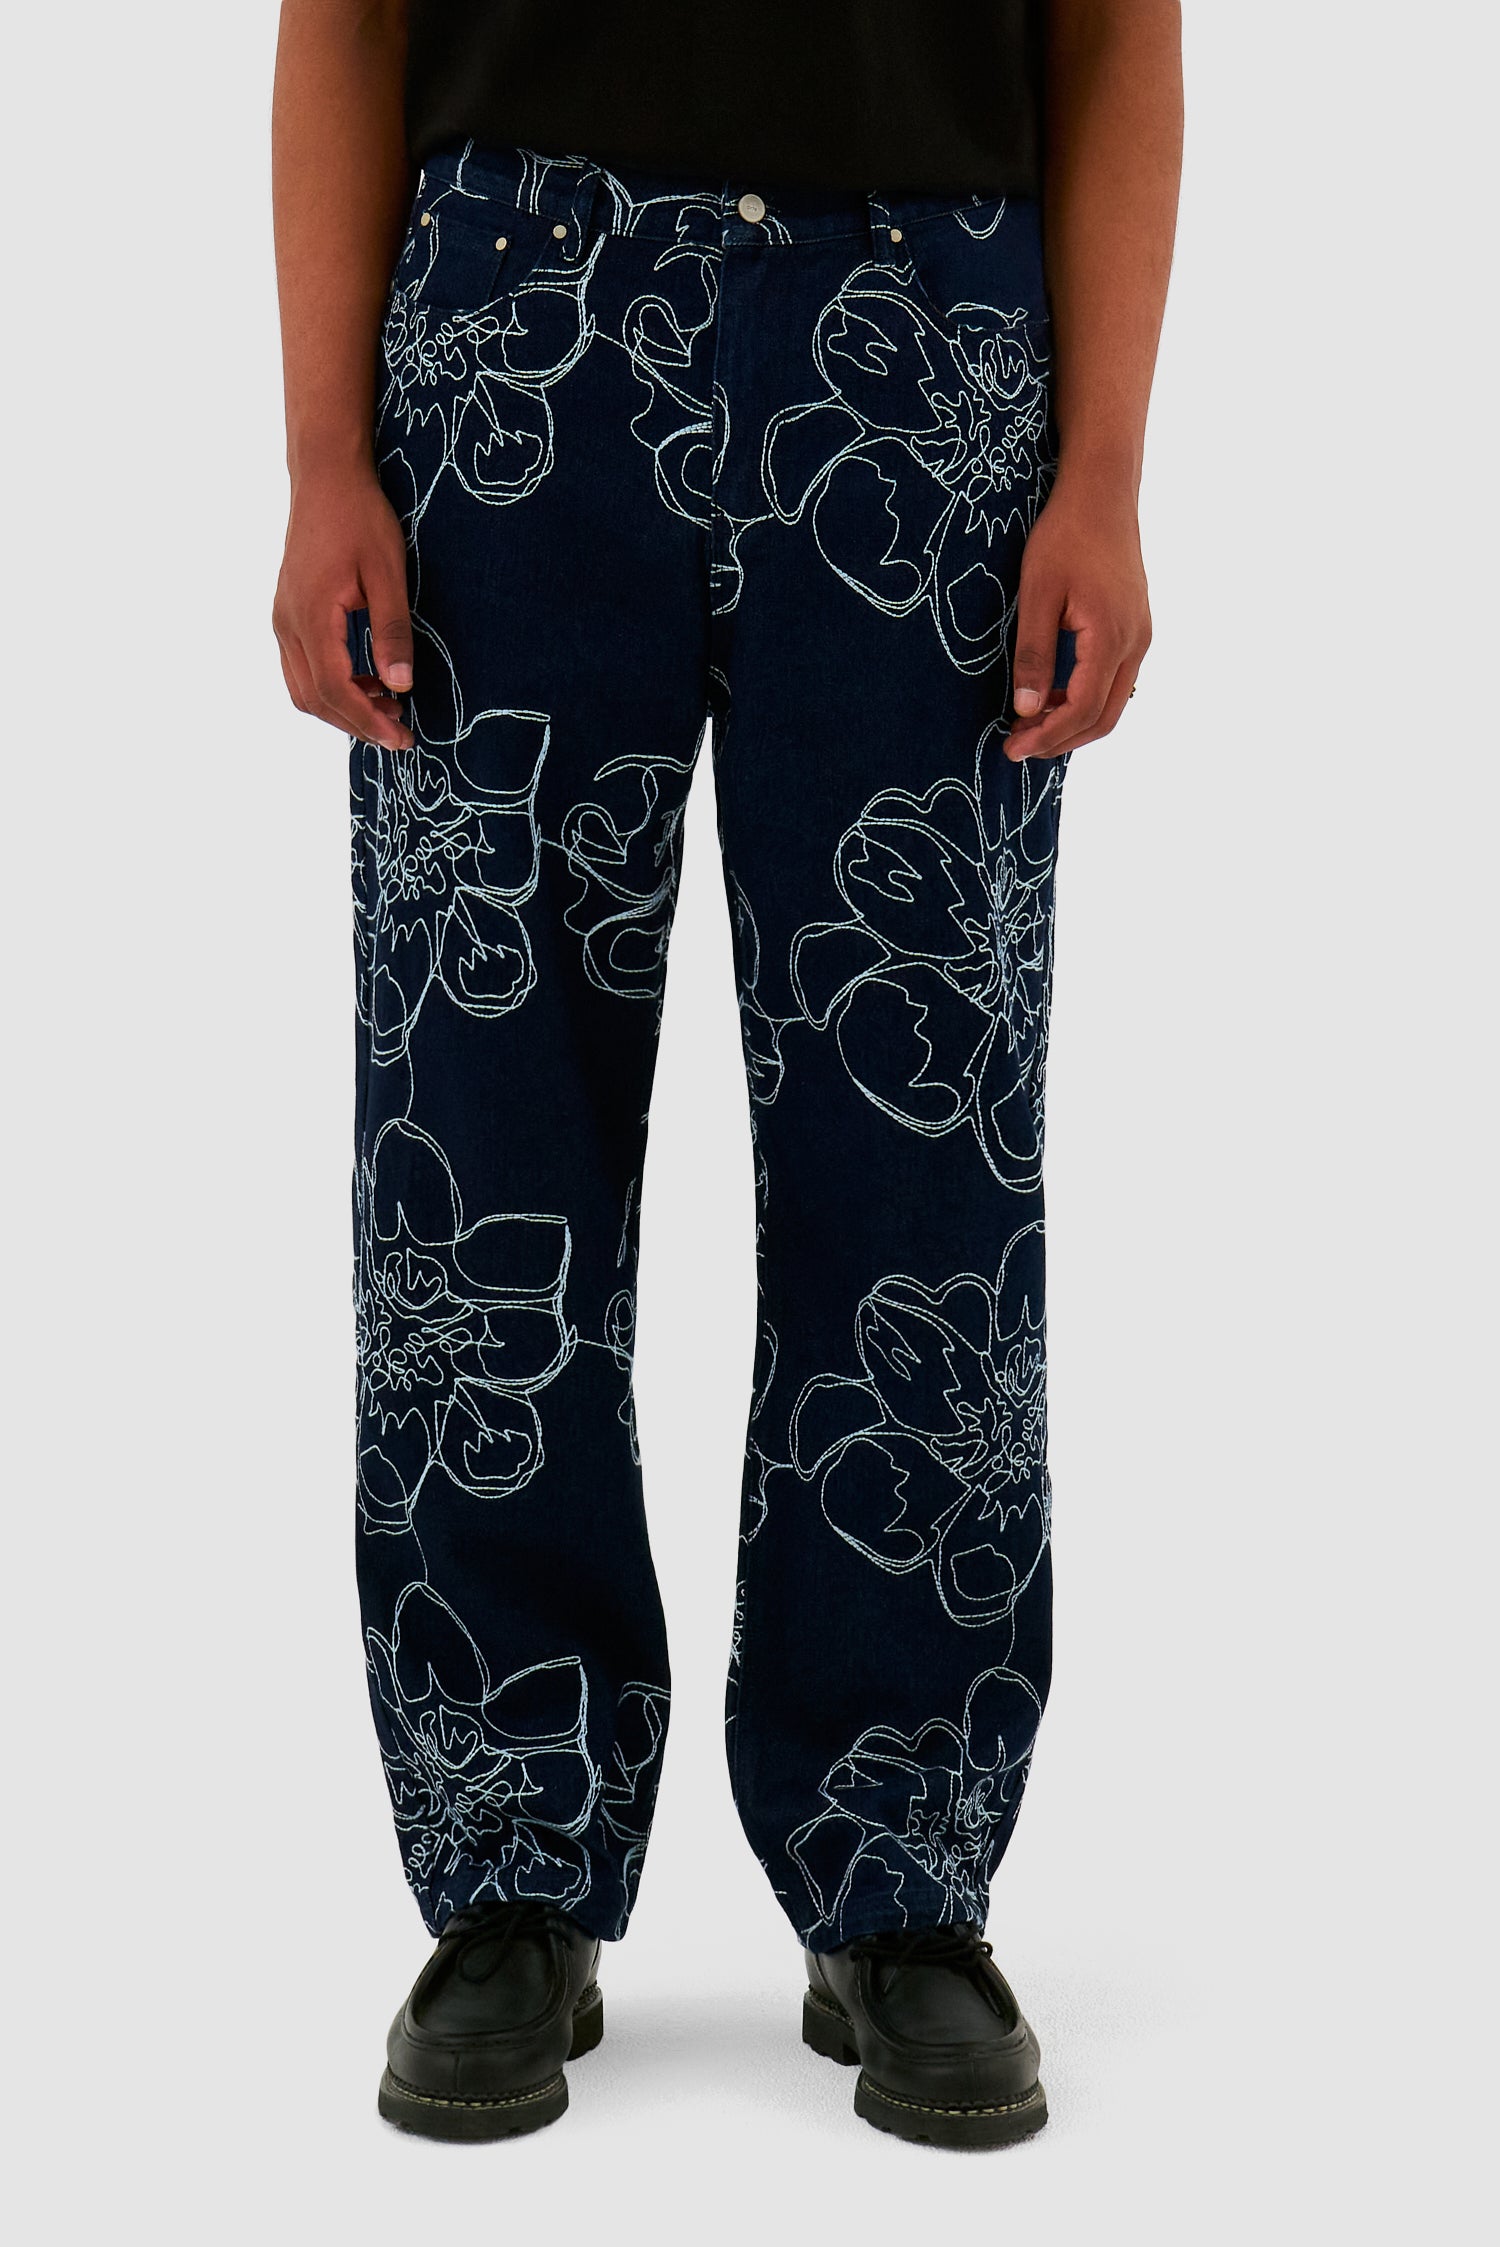 Flower Stitch Pants - Navy